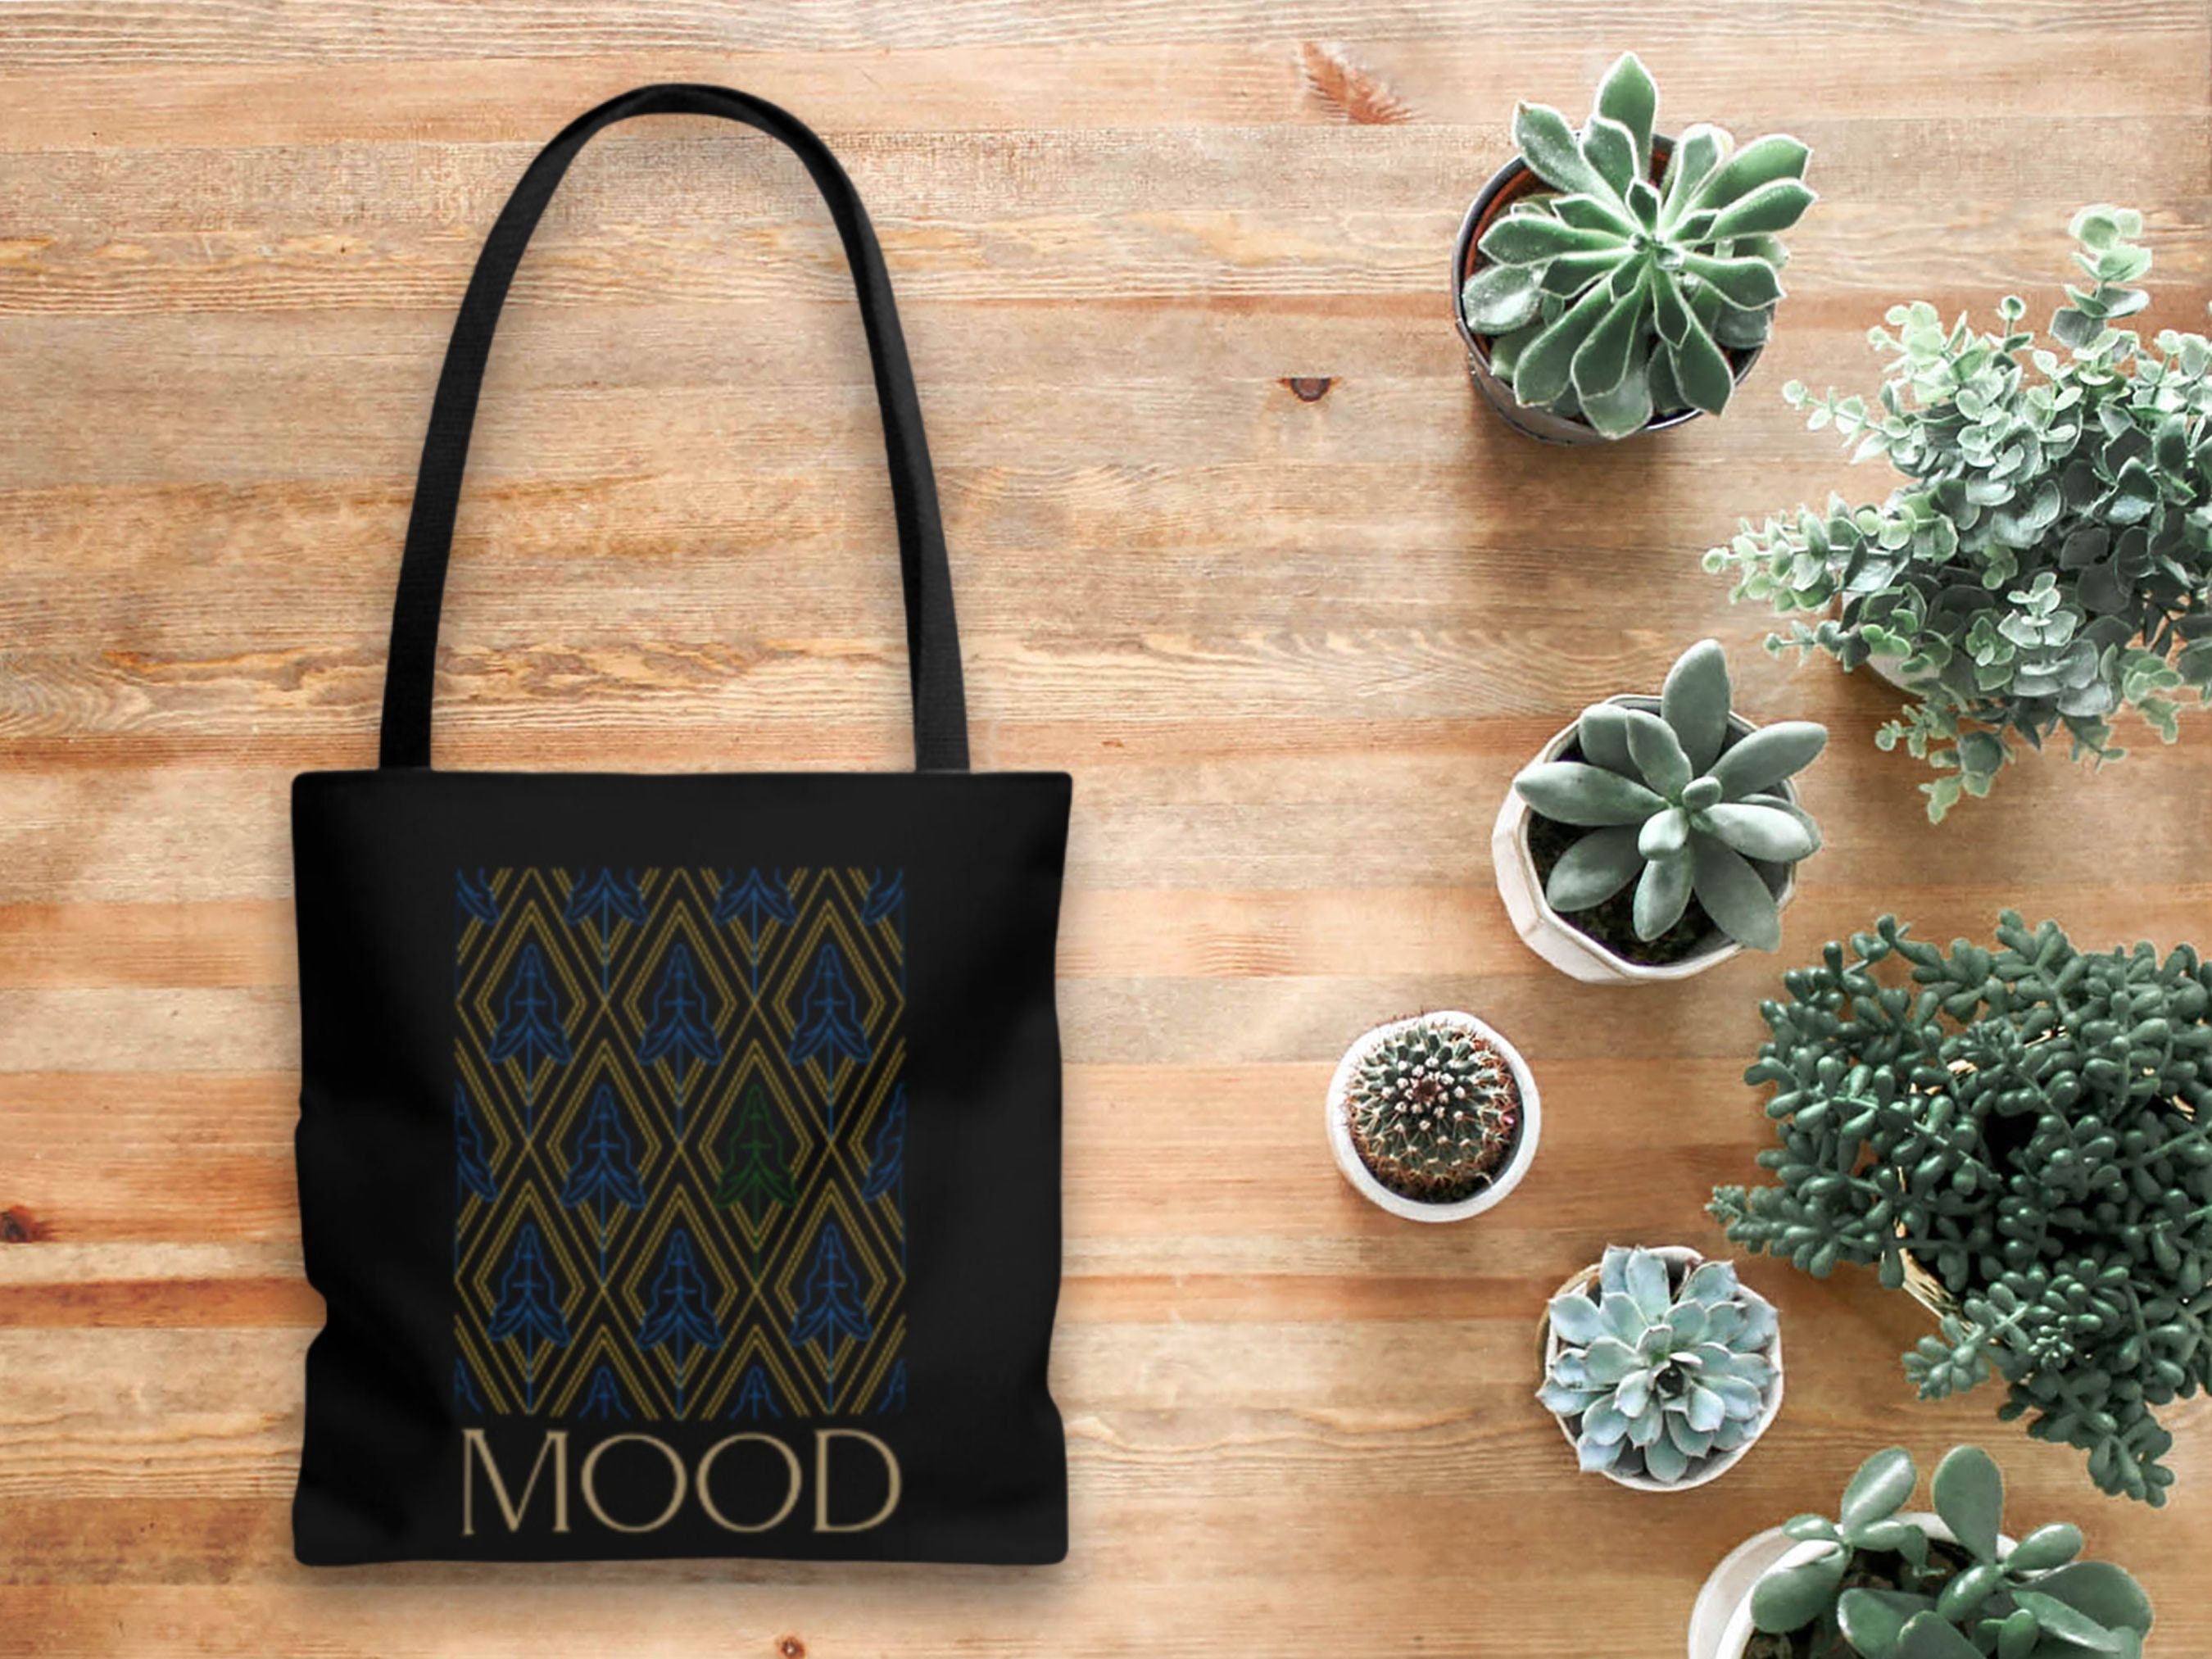 Mood Tote Bag Patterns